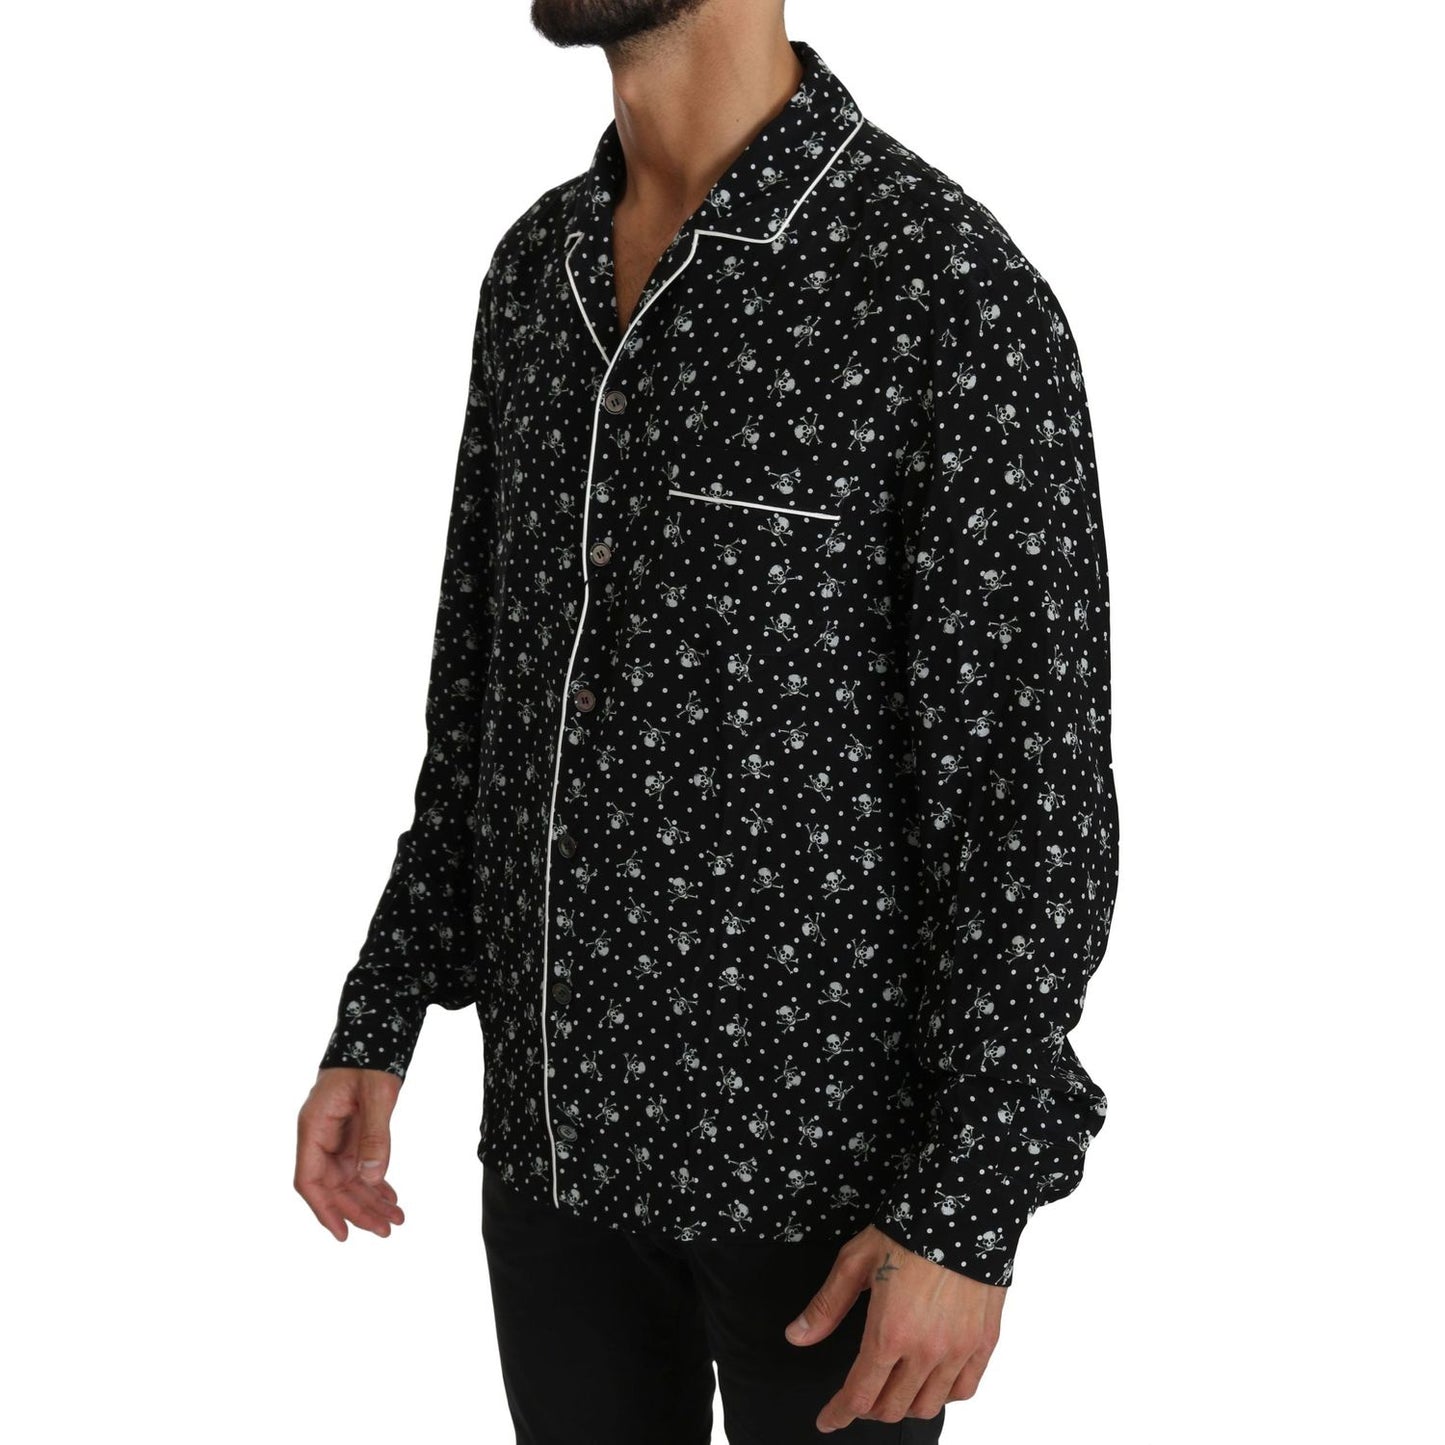 Dolce & Gabbana Elegant Silk Pajama Shirt with Skull Print black-skull-print-silk-sleepwear-shirt IMG_0787-scaled-90d0381c-782.jpg